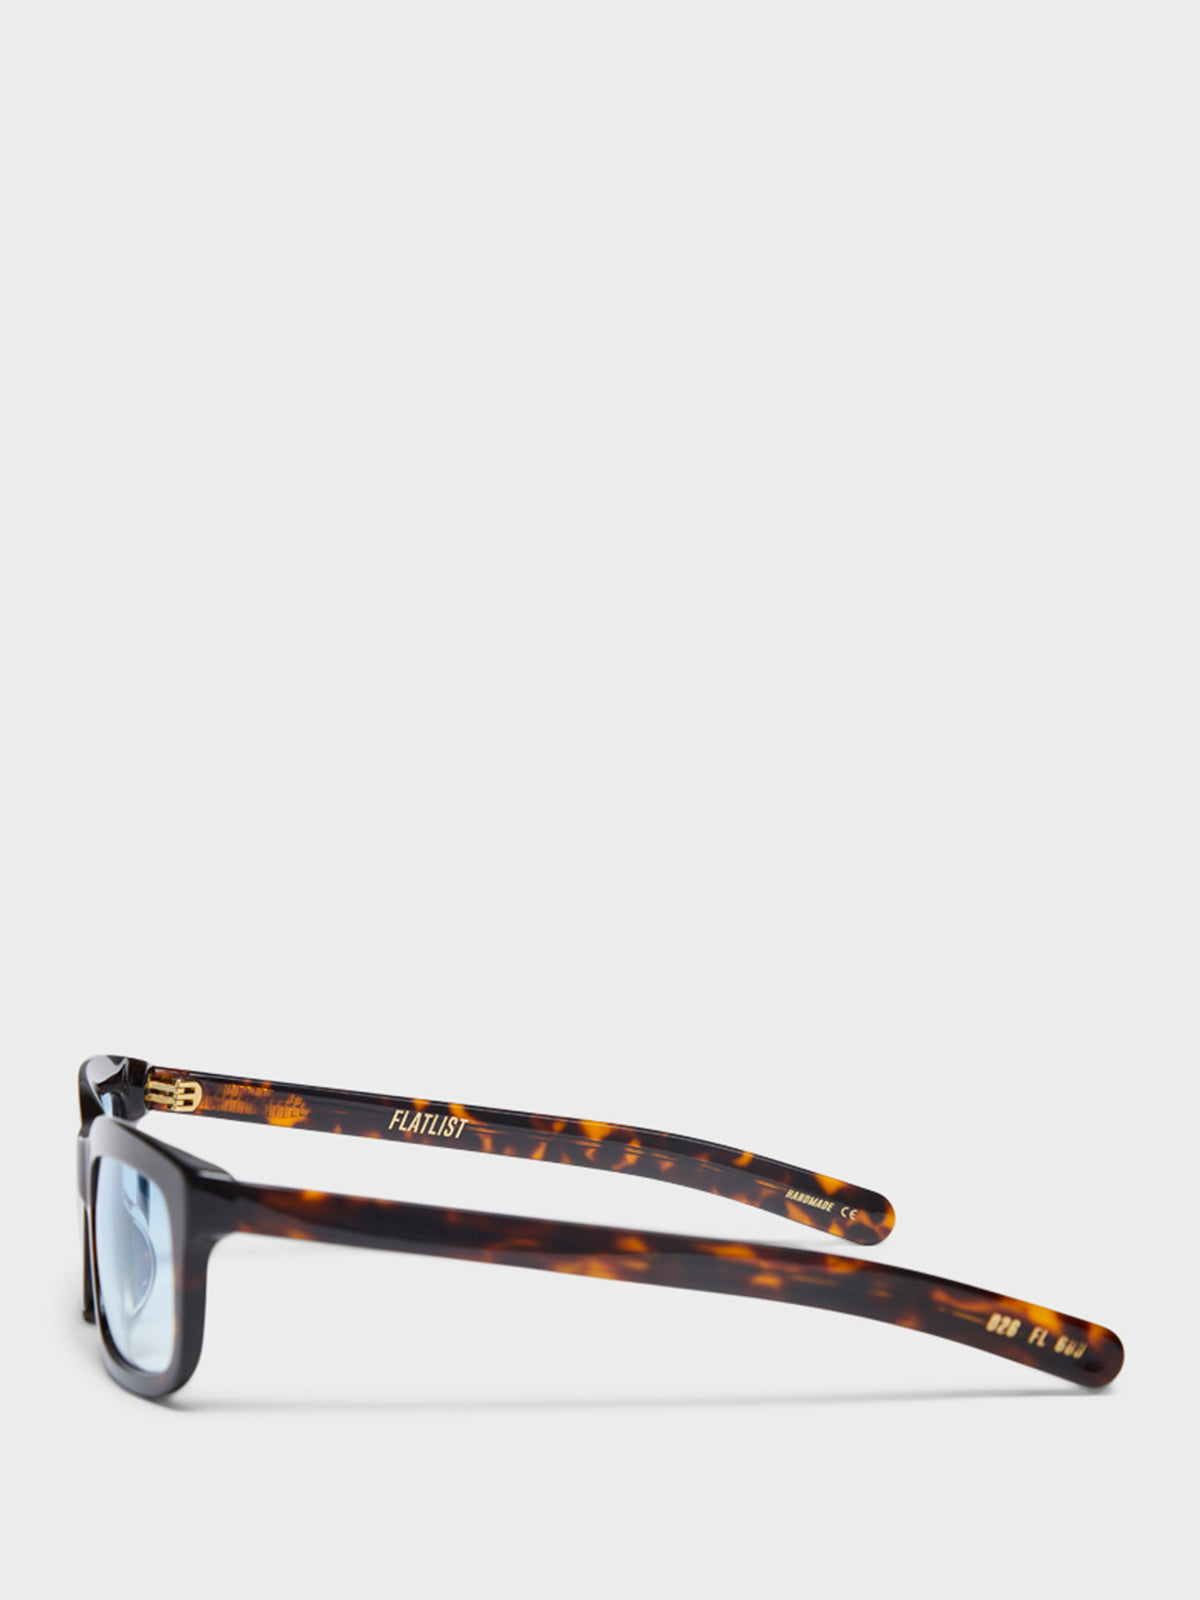 Palmer Sunglasses in Dark Tortoise